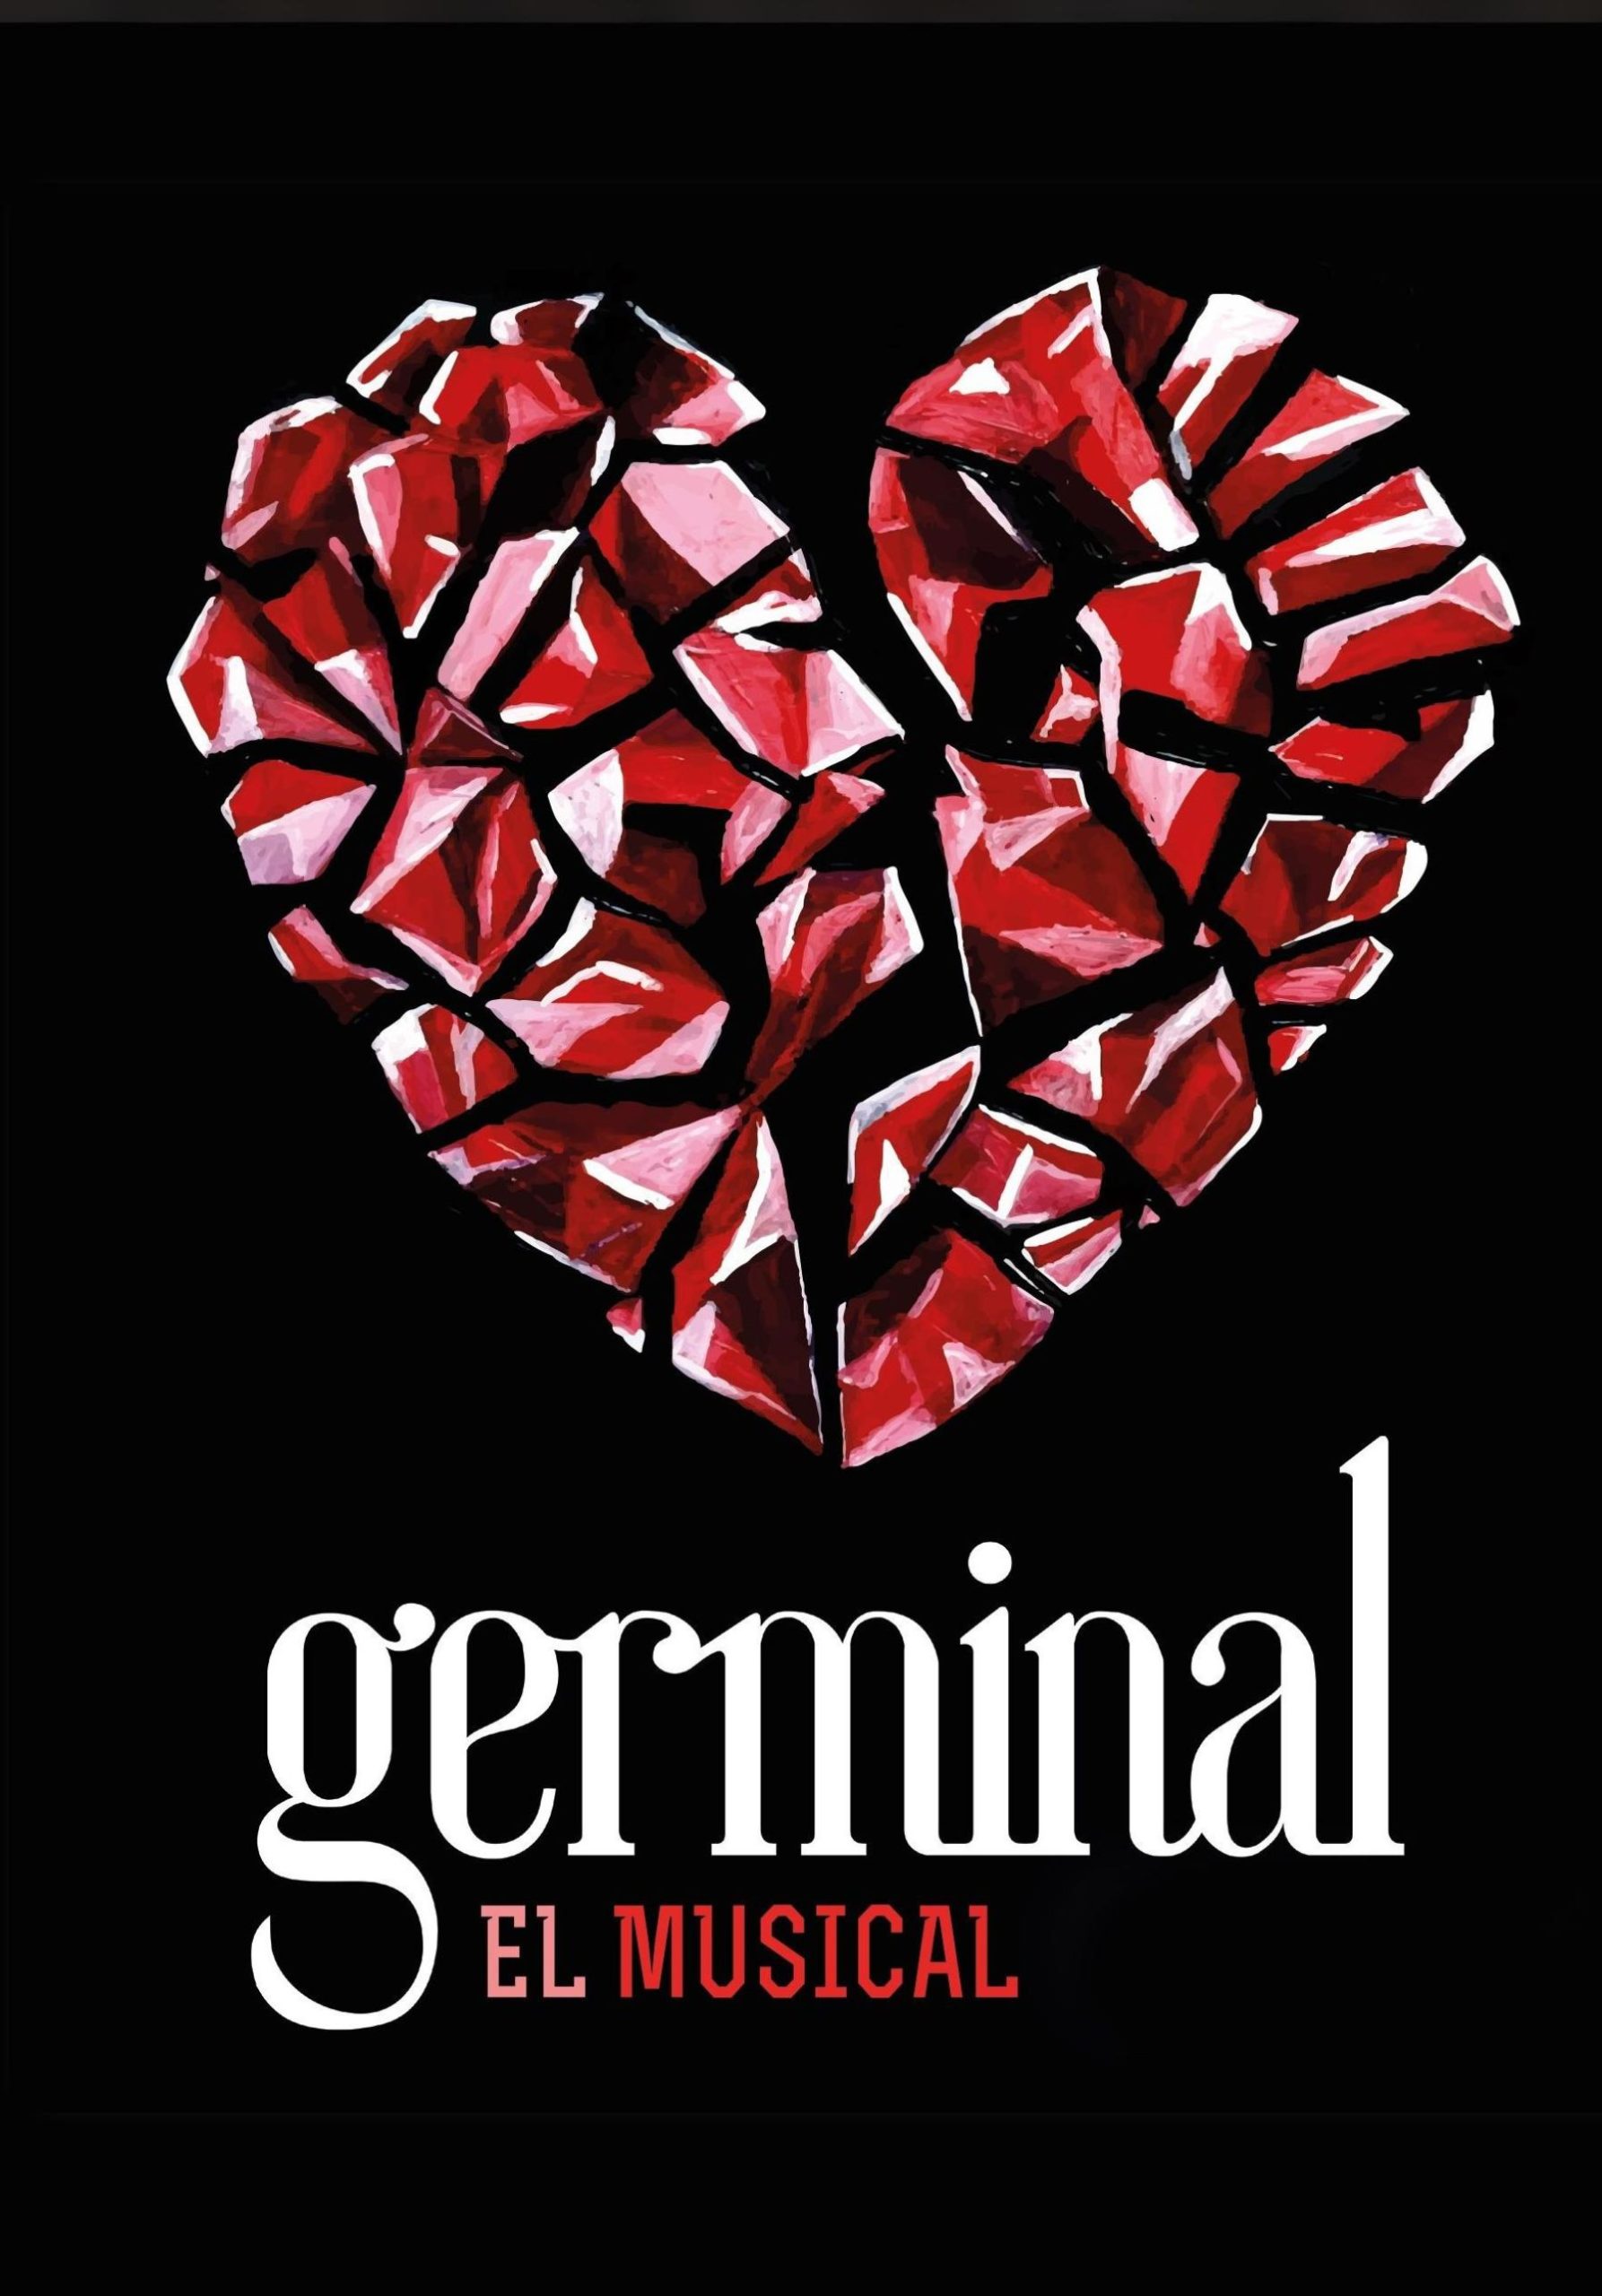 Germinal, El musical